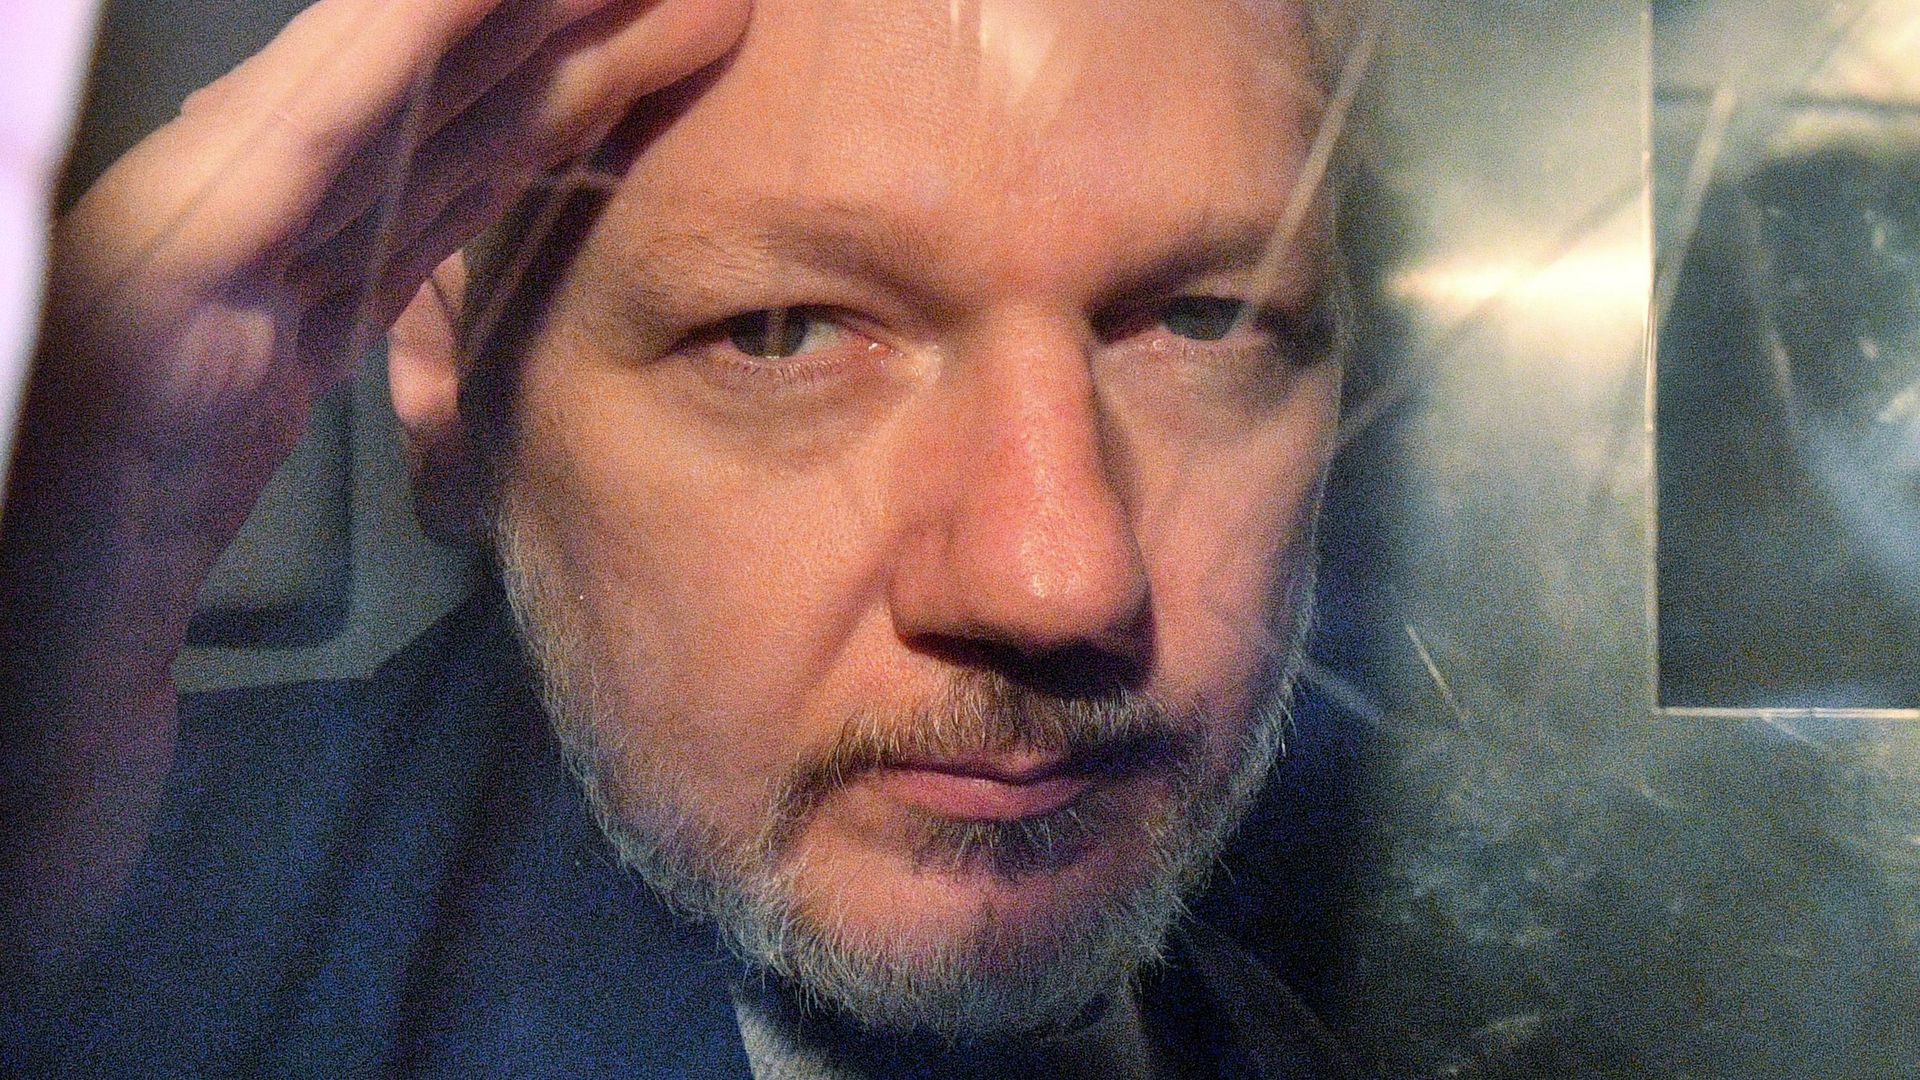 Photo of Julian Assange's face peering through a prison van window